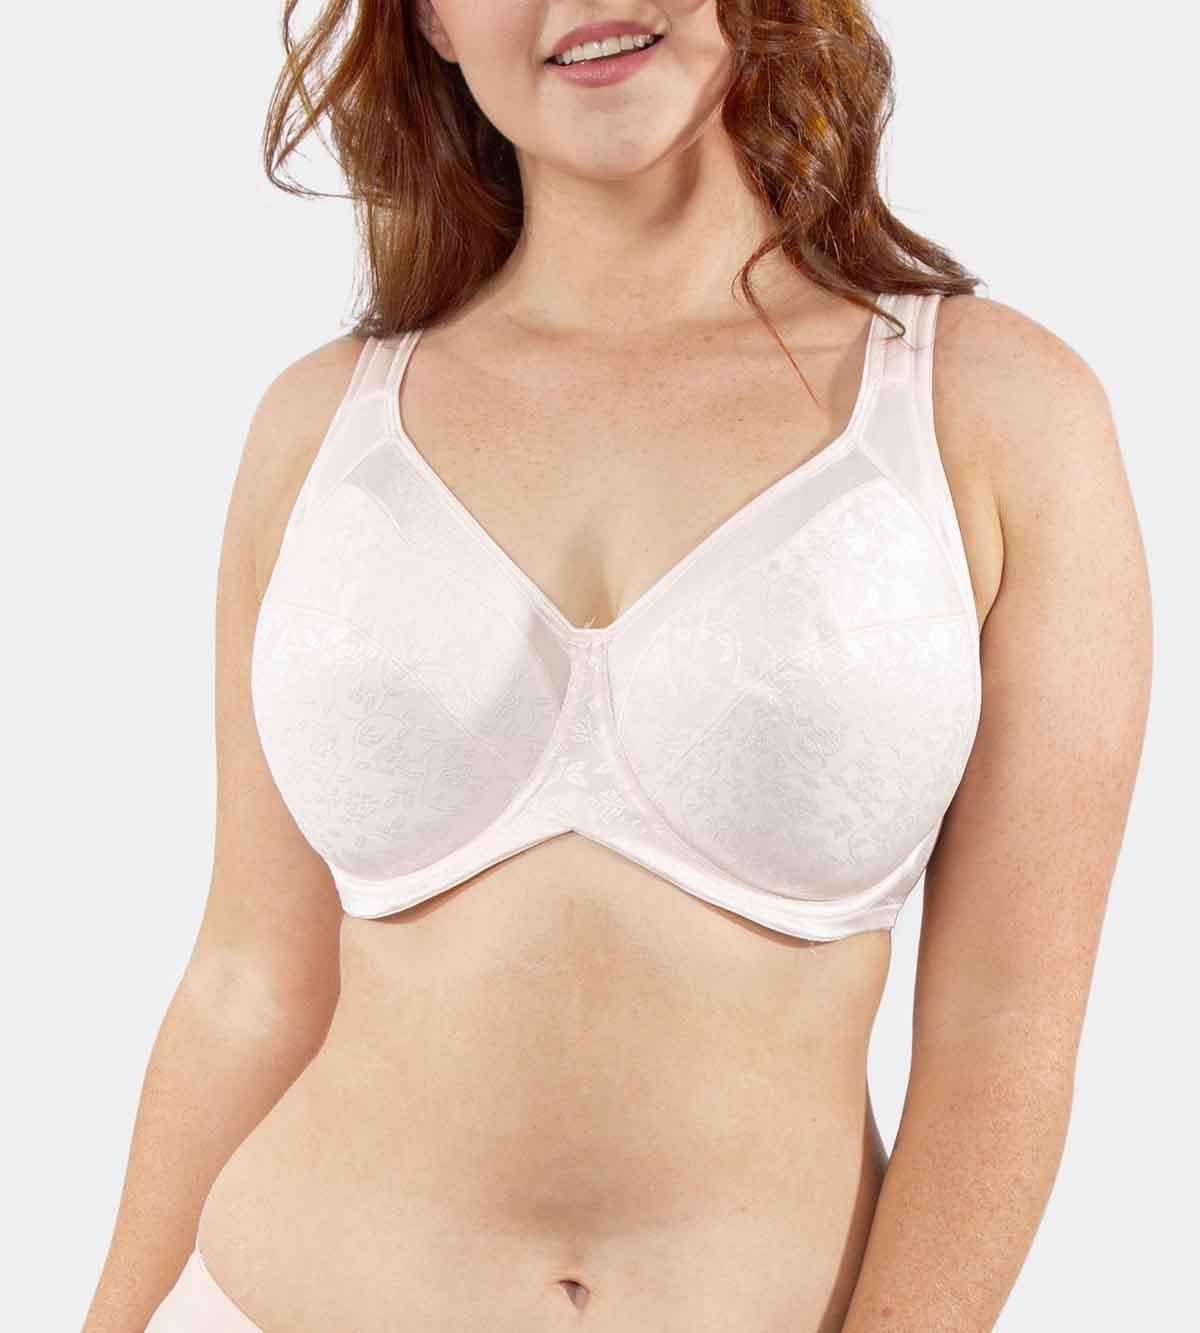 Formfit by Triumph Women's Lace Comfort Bra - White - Size 22DD